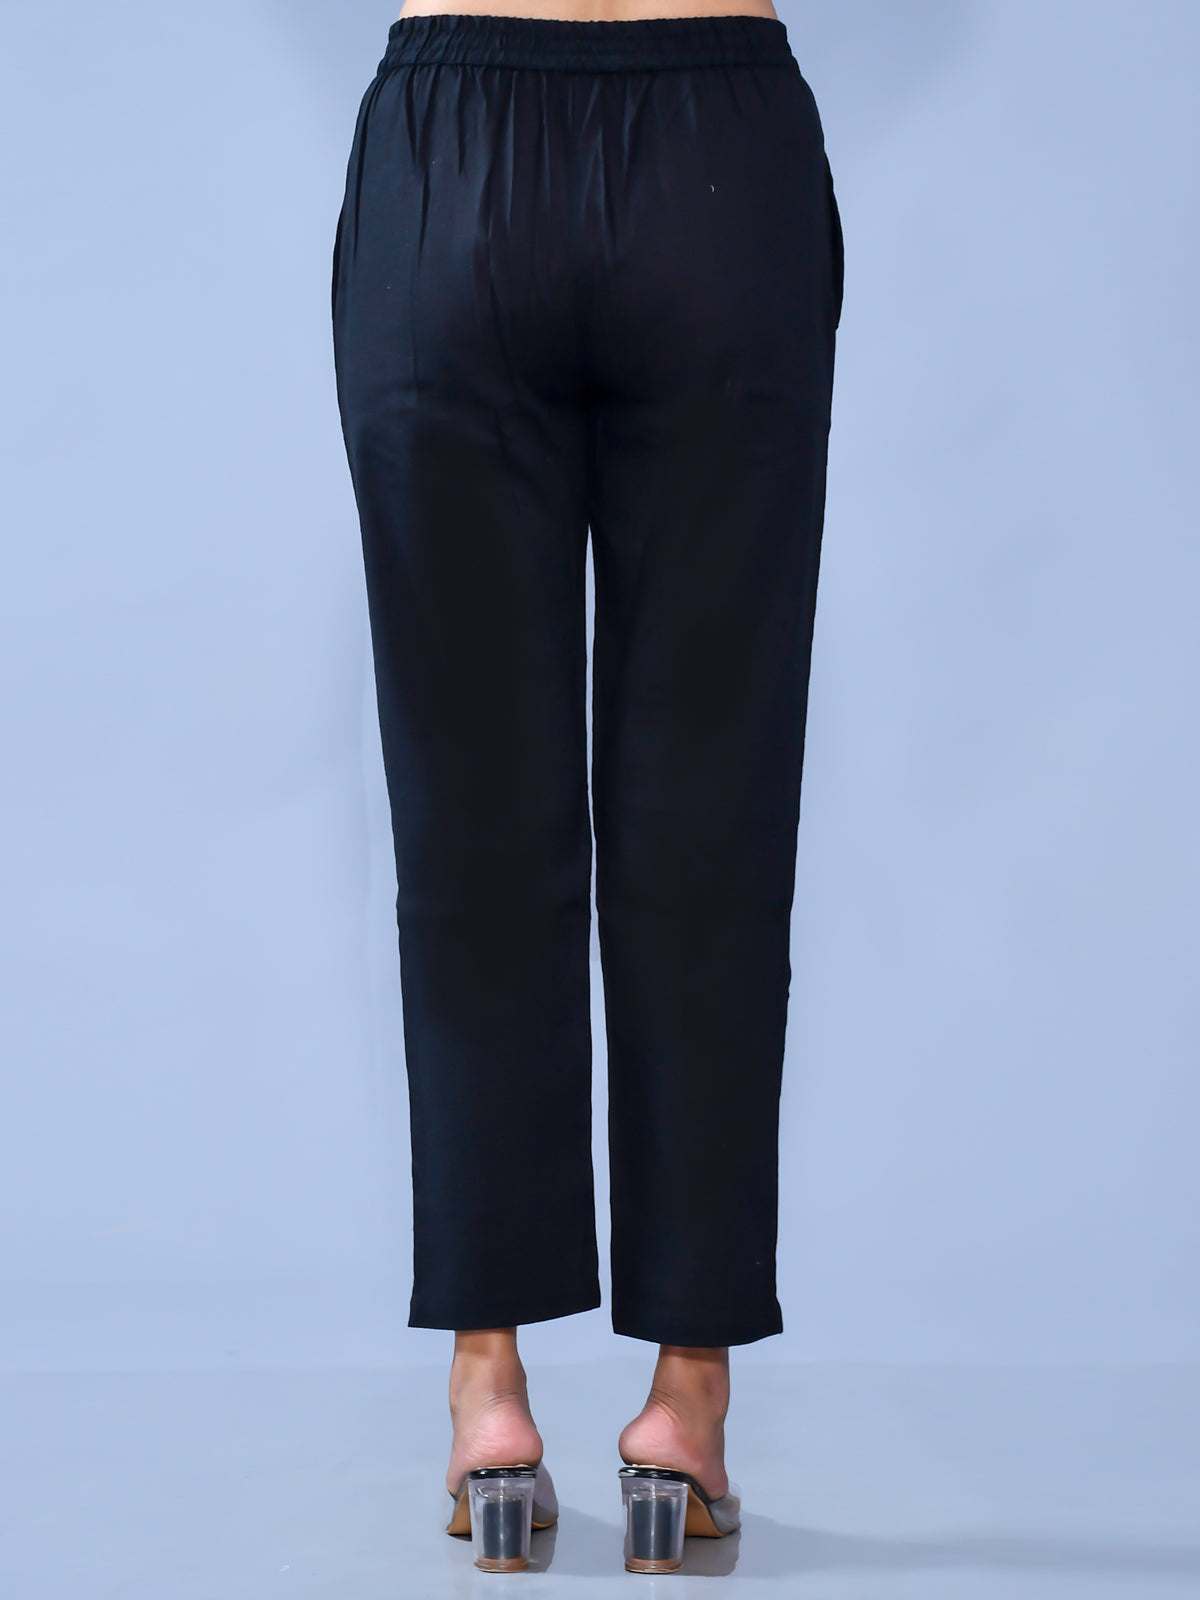 Pack Of 2 Womens Regular Fit Black And Mustard Cotton Slub Belt Pant Combo